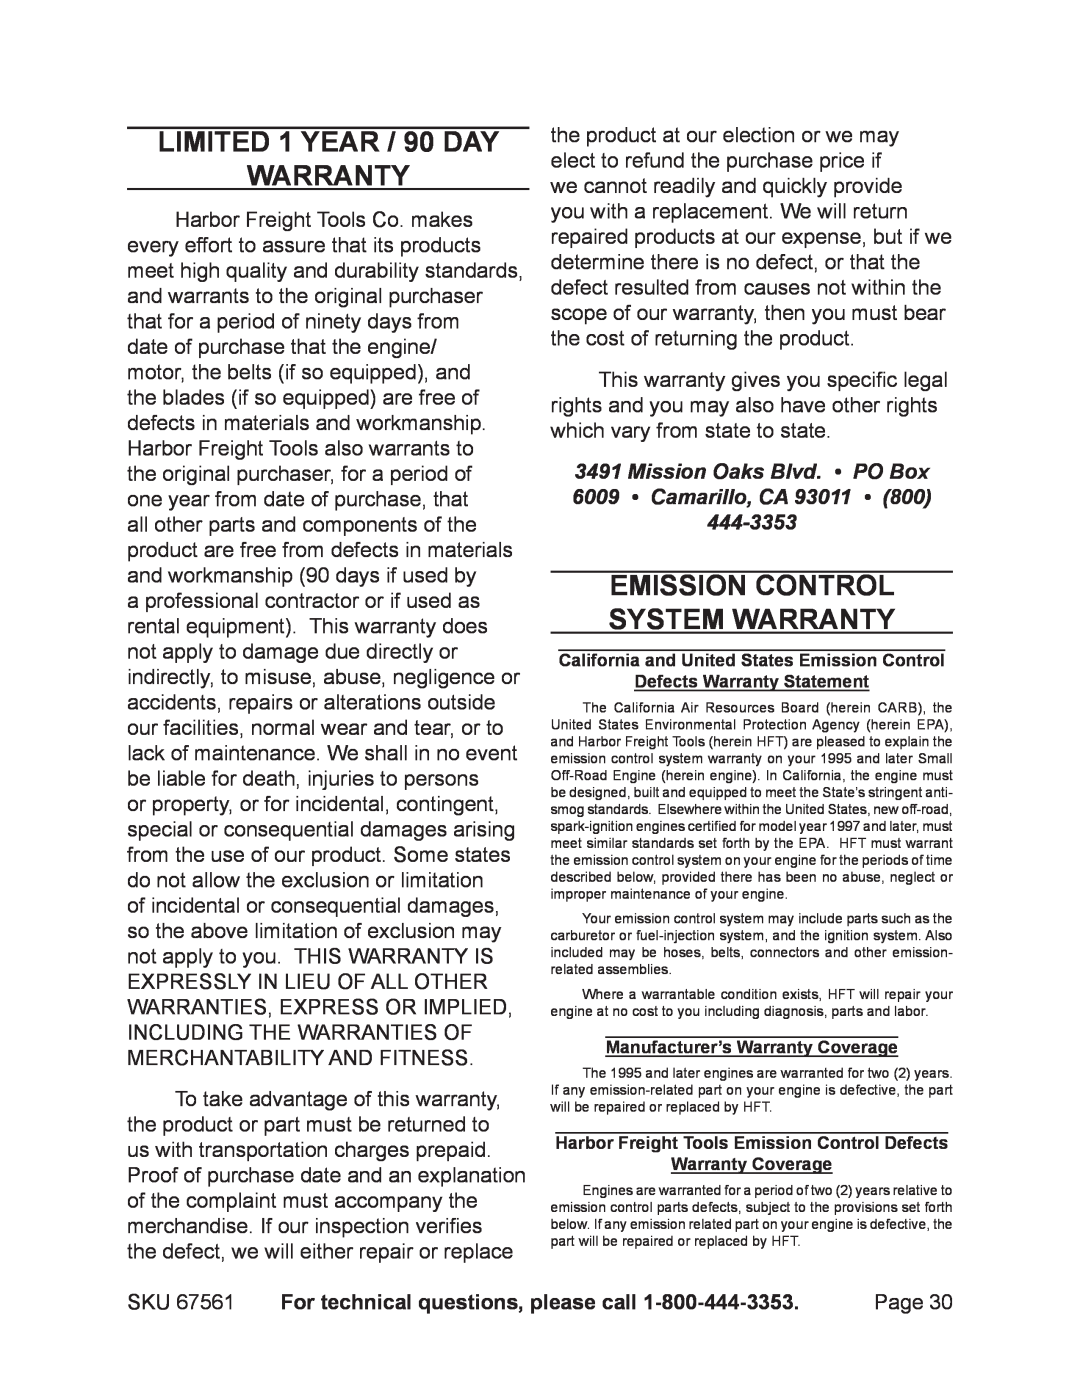 Chicago Electric 67561 manual Limited 1 year / 90 Day warranty, Emission Control System Warranty 